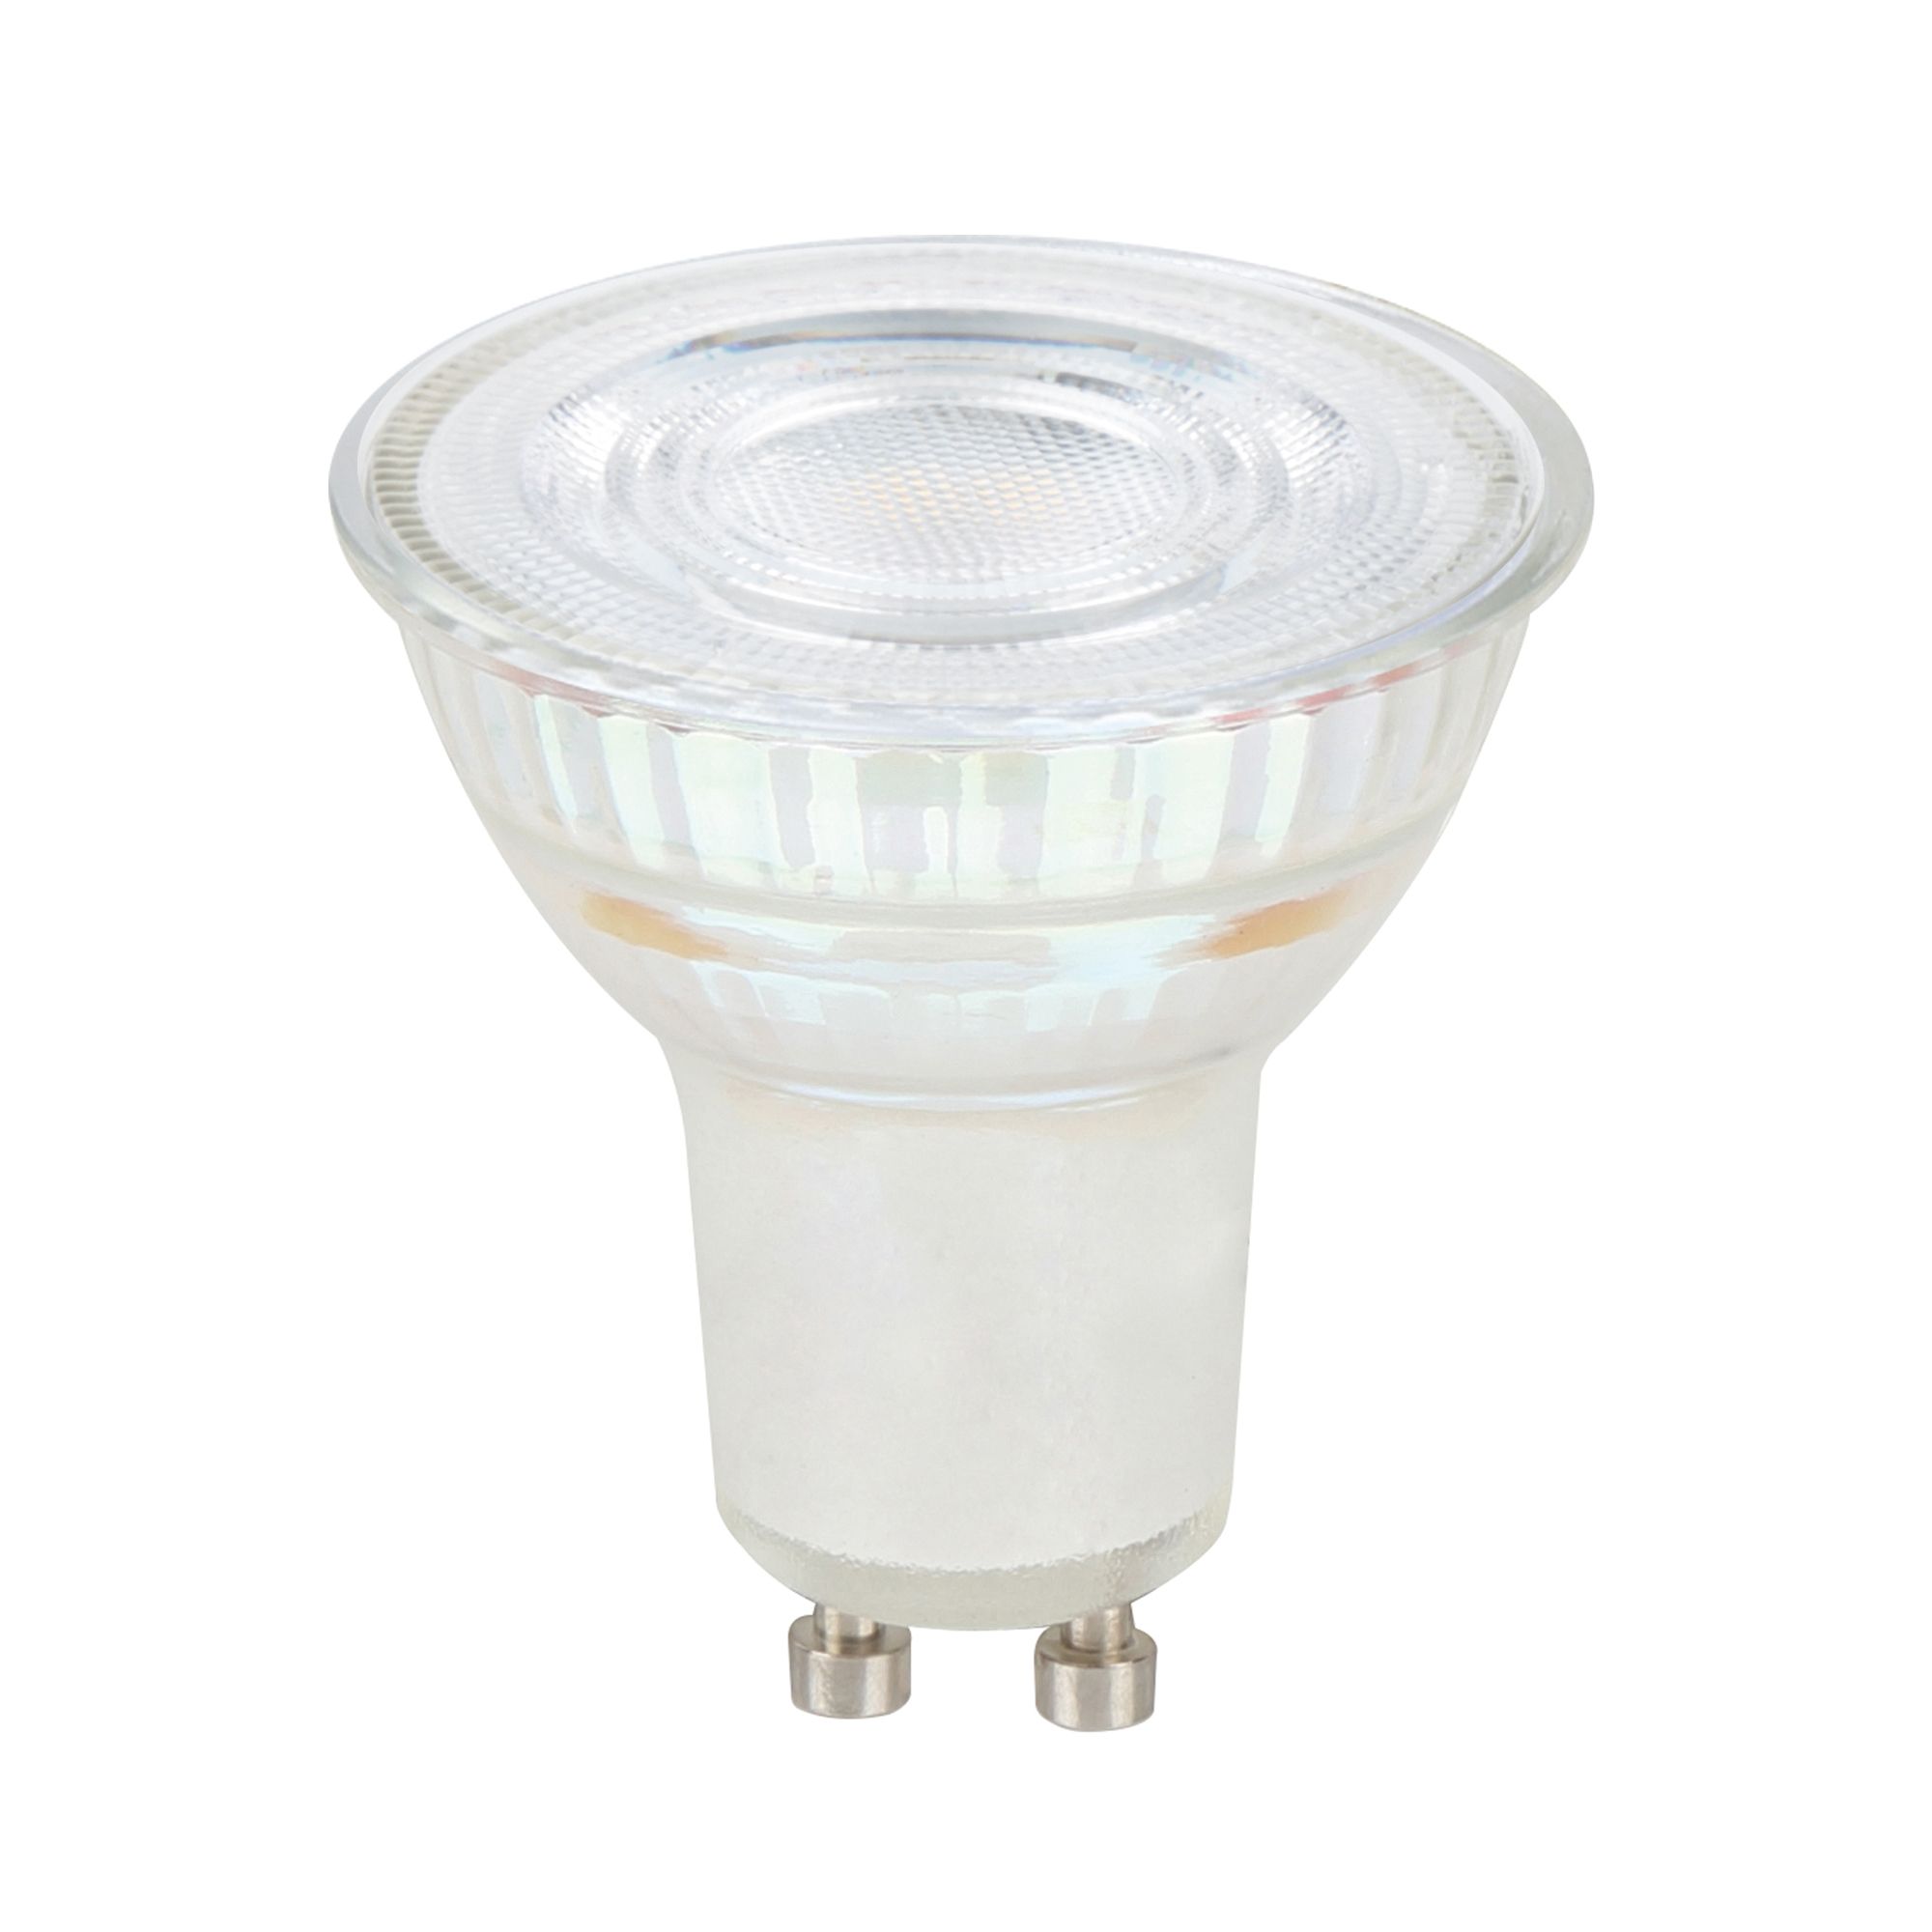 LED | Dimmable spot white bulb Diall B&Q Clear at Neutral Light Reflector DIY GU10 3.6W 345lm